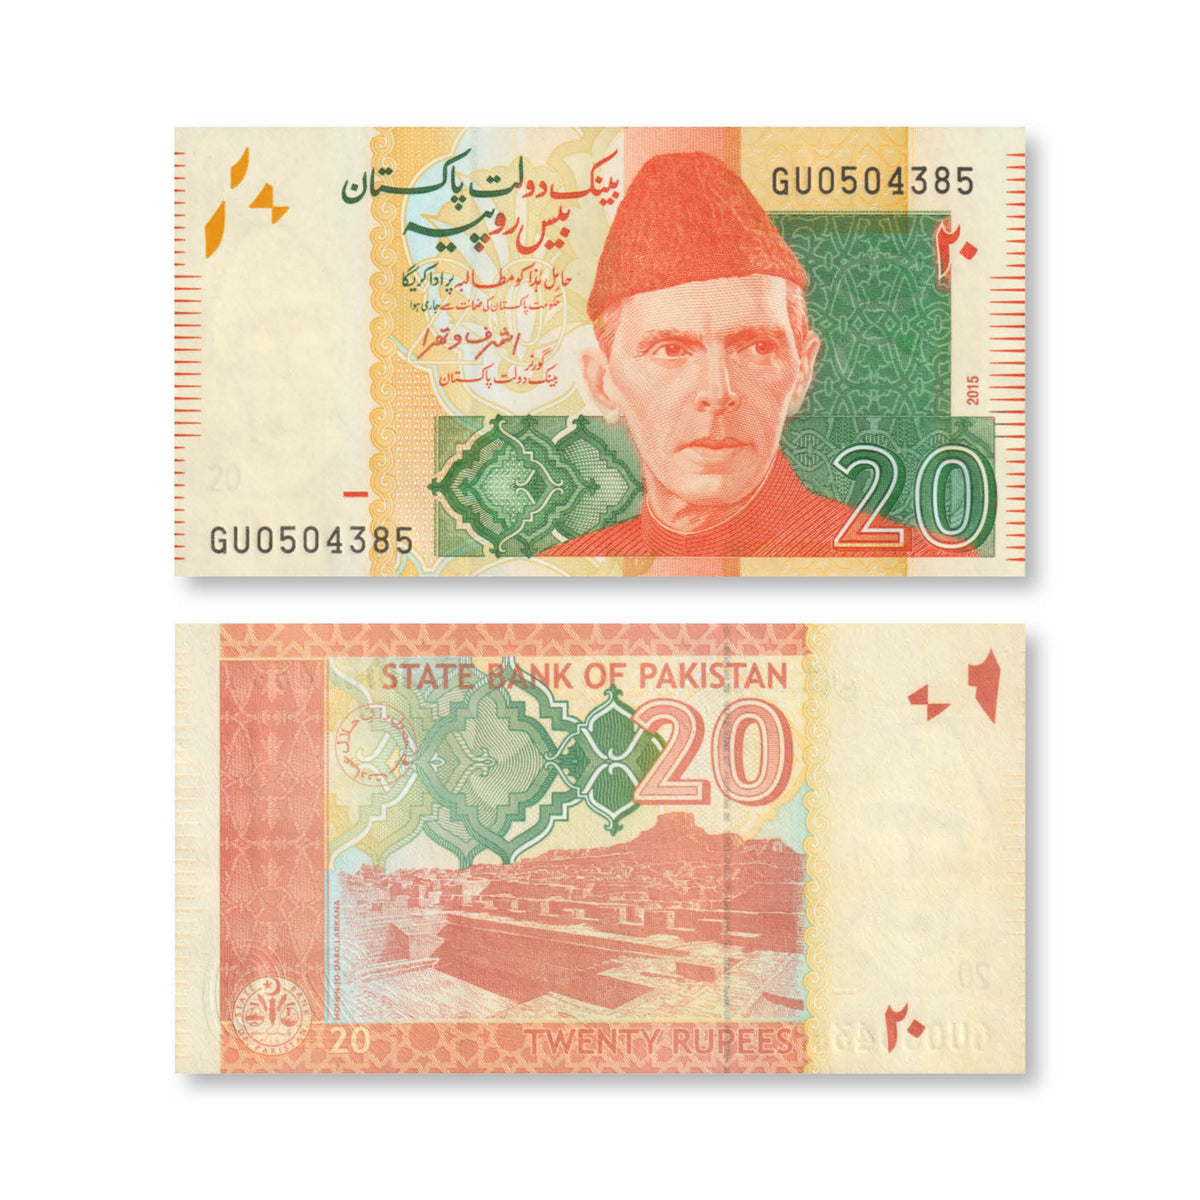 Pakistan 20 Rupees, 2015, B233l, P55i, UNC - Robert's World Money - World Banknotes